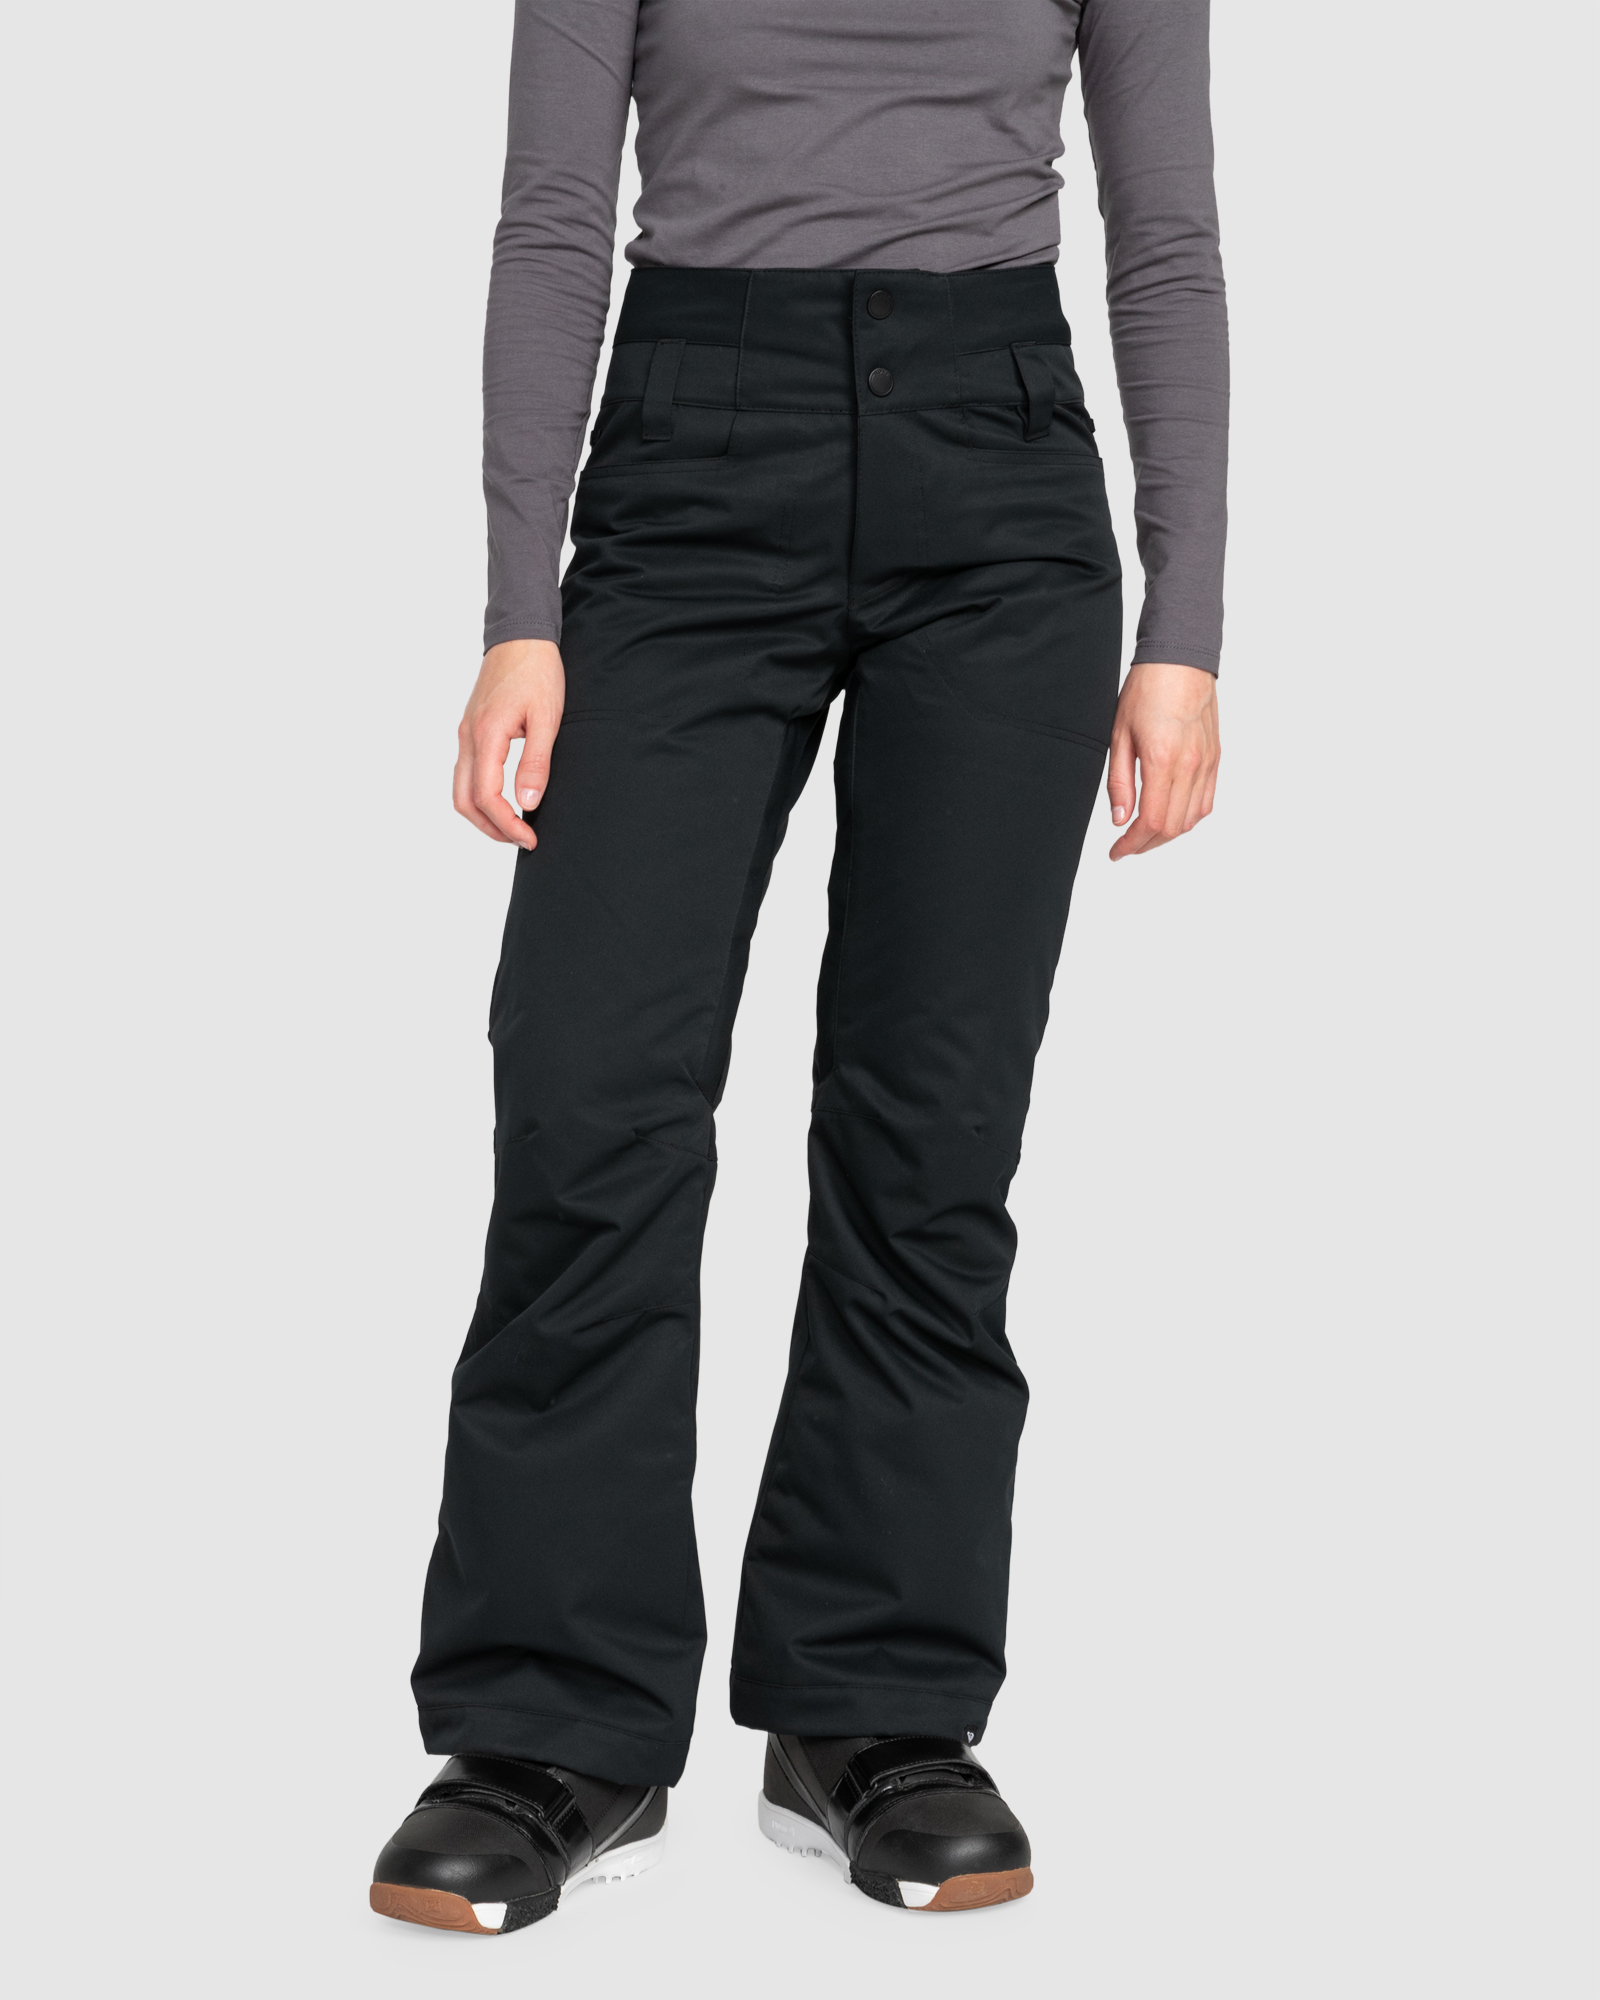 Roxy Womens Diversion Technical Snow Pants - True Black